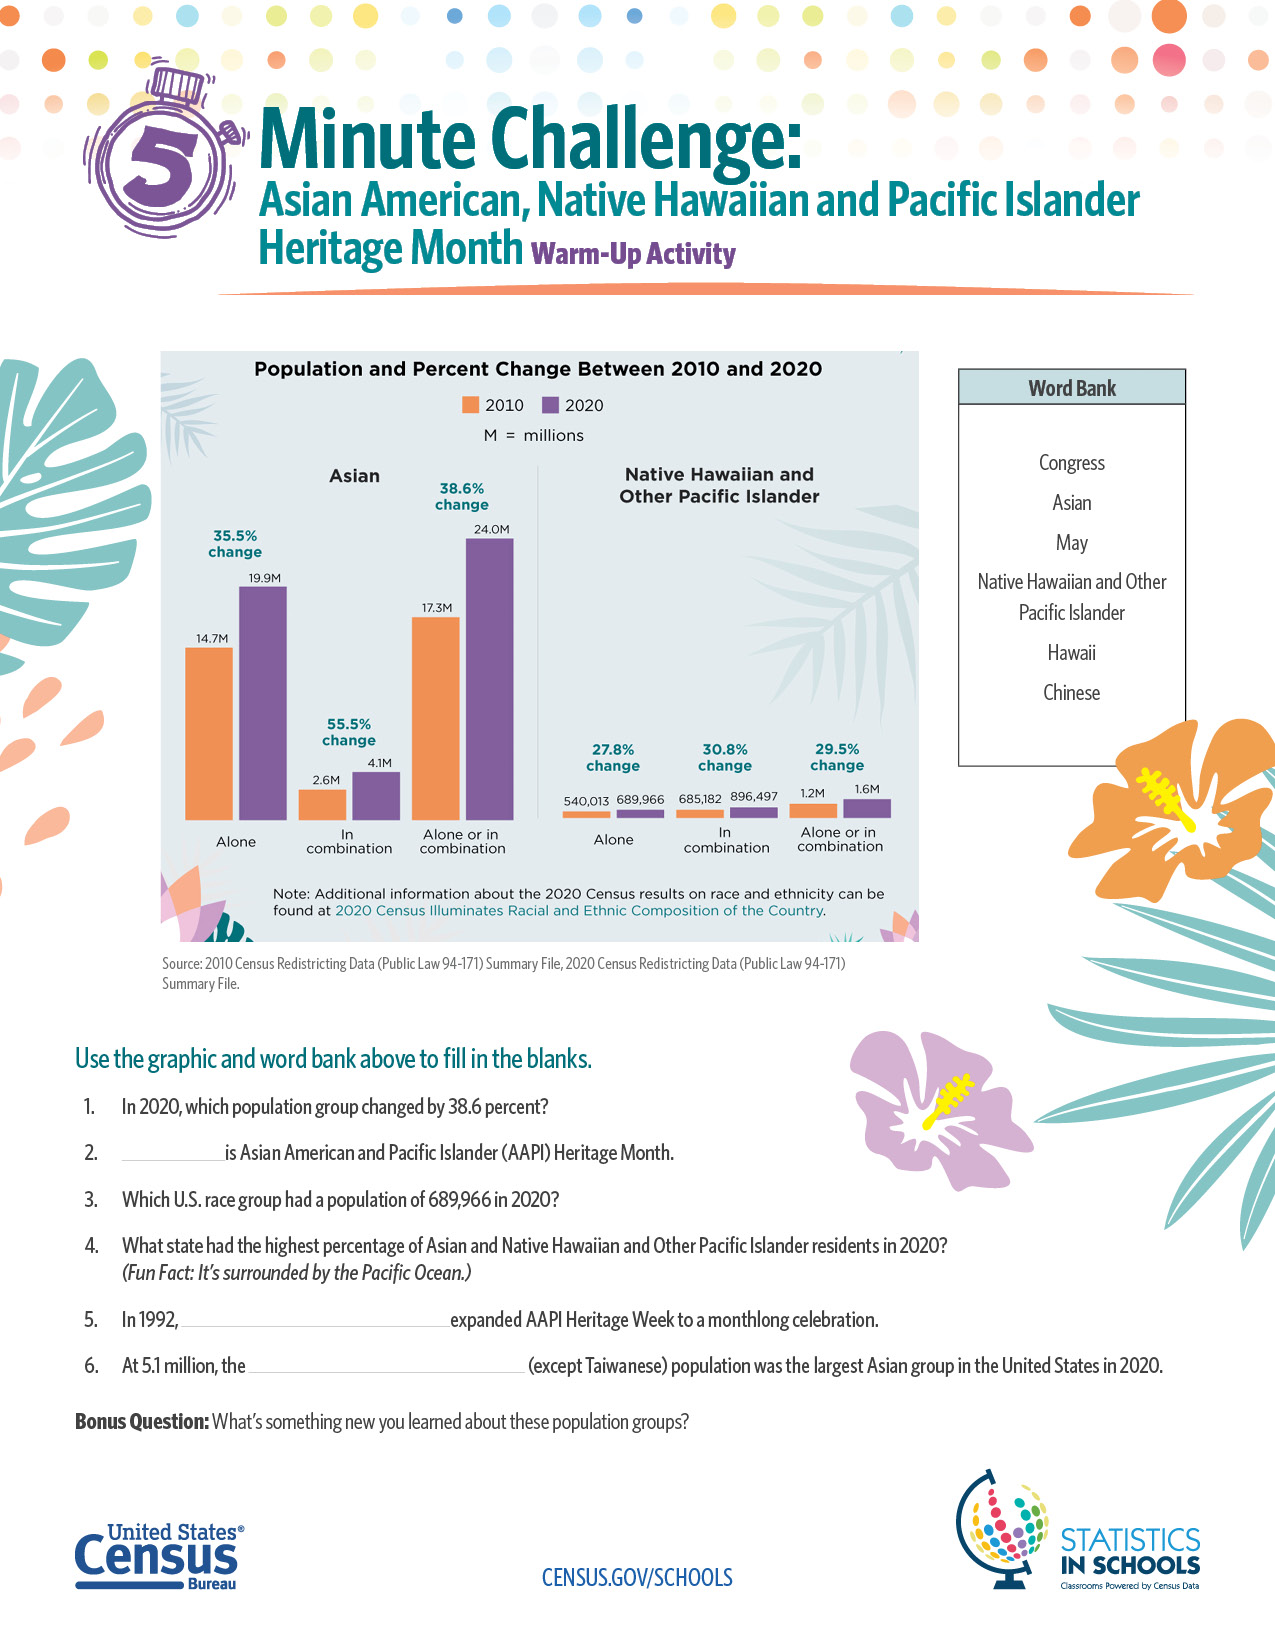 Asian American, Native Hawaiian and Pacific Islander Heritage Month Warm-Up